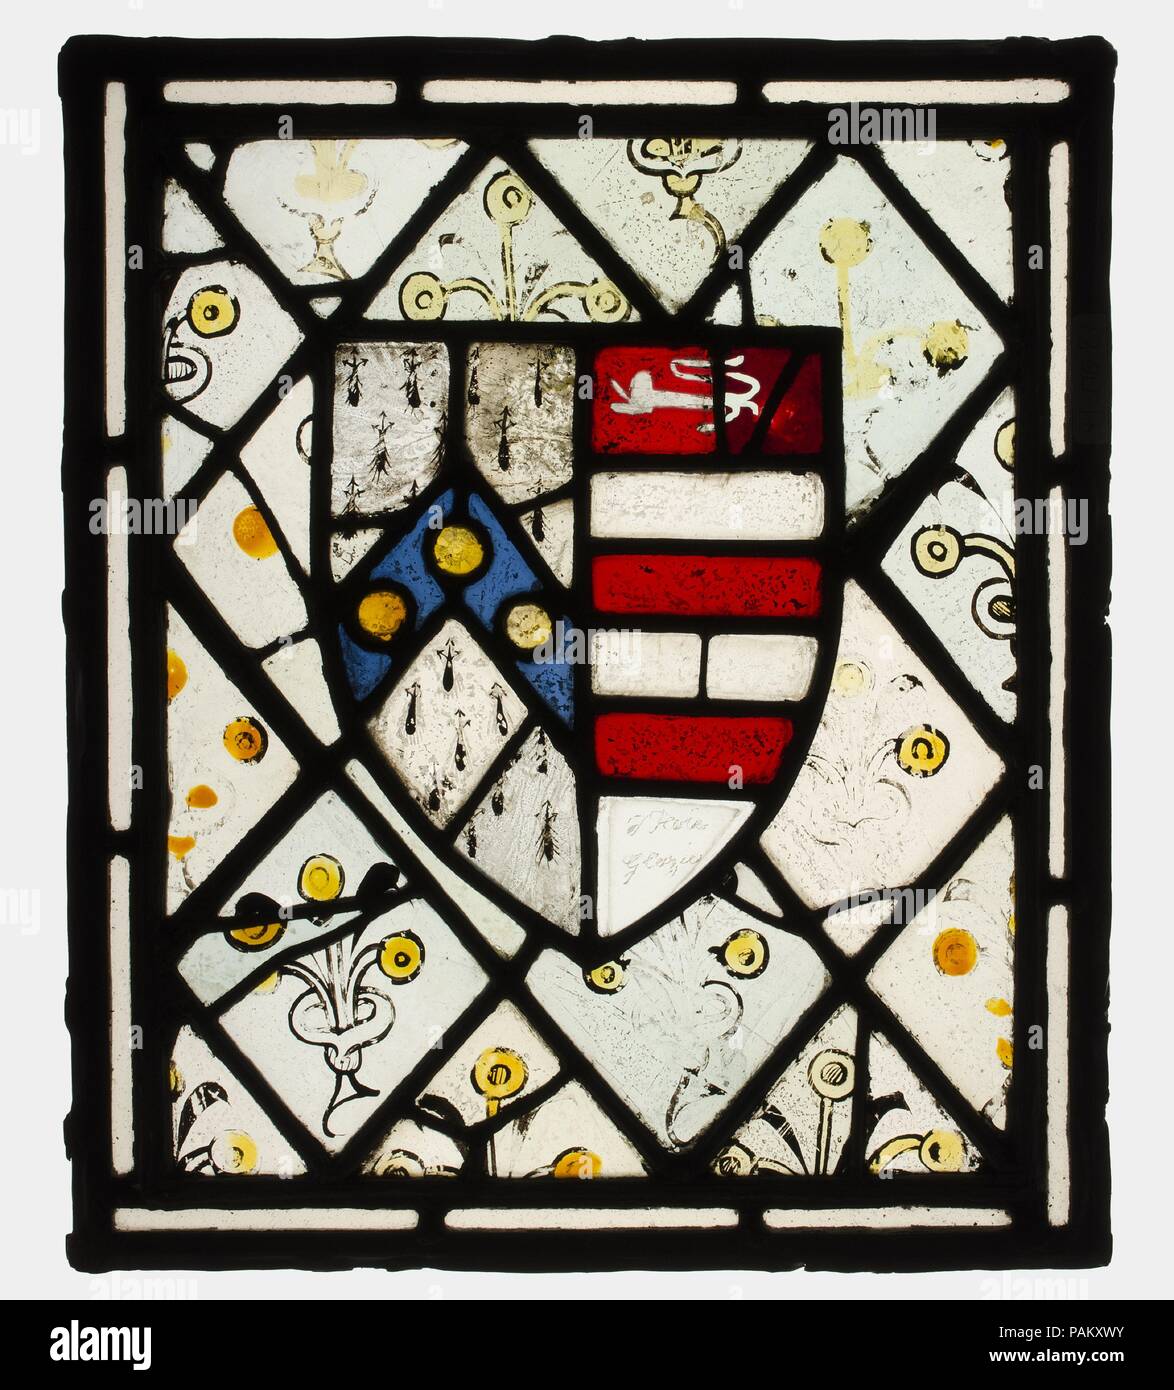 Panel with Heraldic Shield of Johnson. Culture: British. Dimensions: H. 14 3/4, 12 3/4 in.. Date: ca. 1500. Museum: Metropolitan Museum of Art, New York, USA. Stock Photo